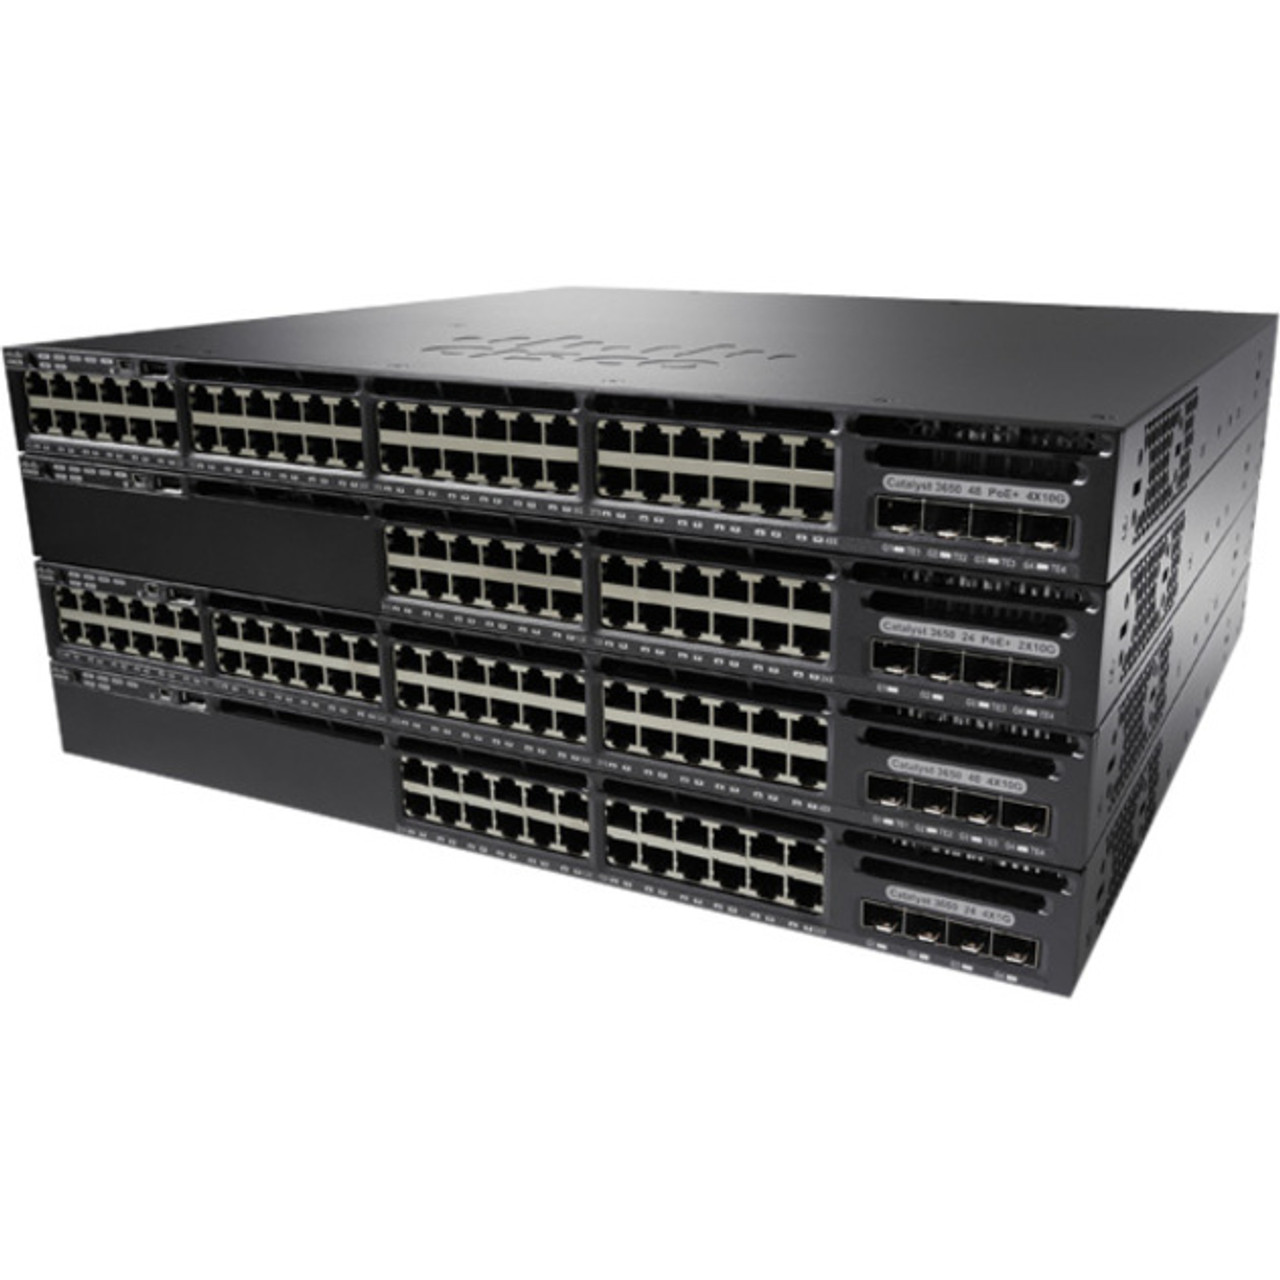 Cisco Catalyst 3650-48T Layer 3 Switch